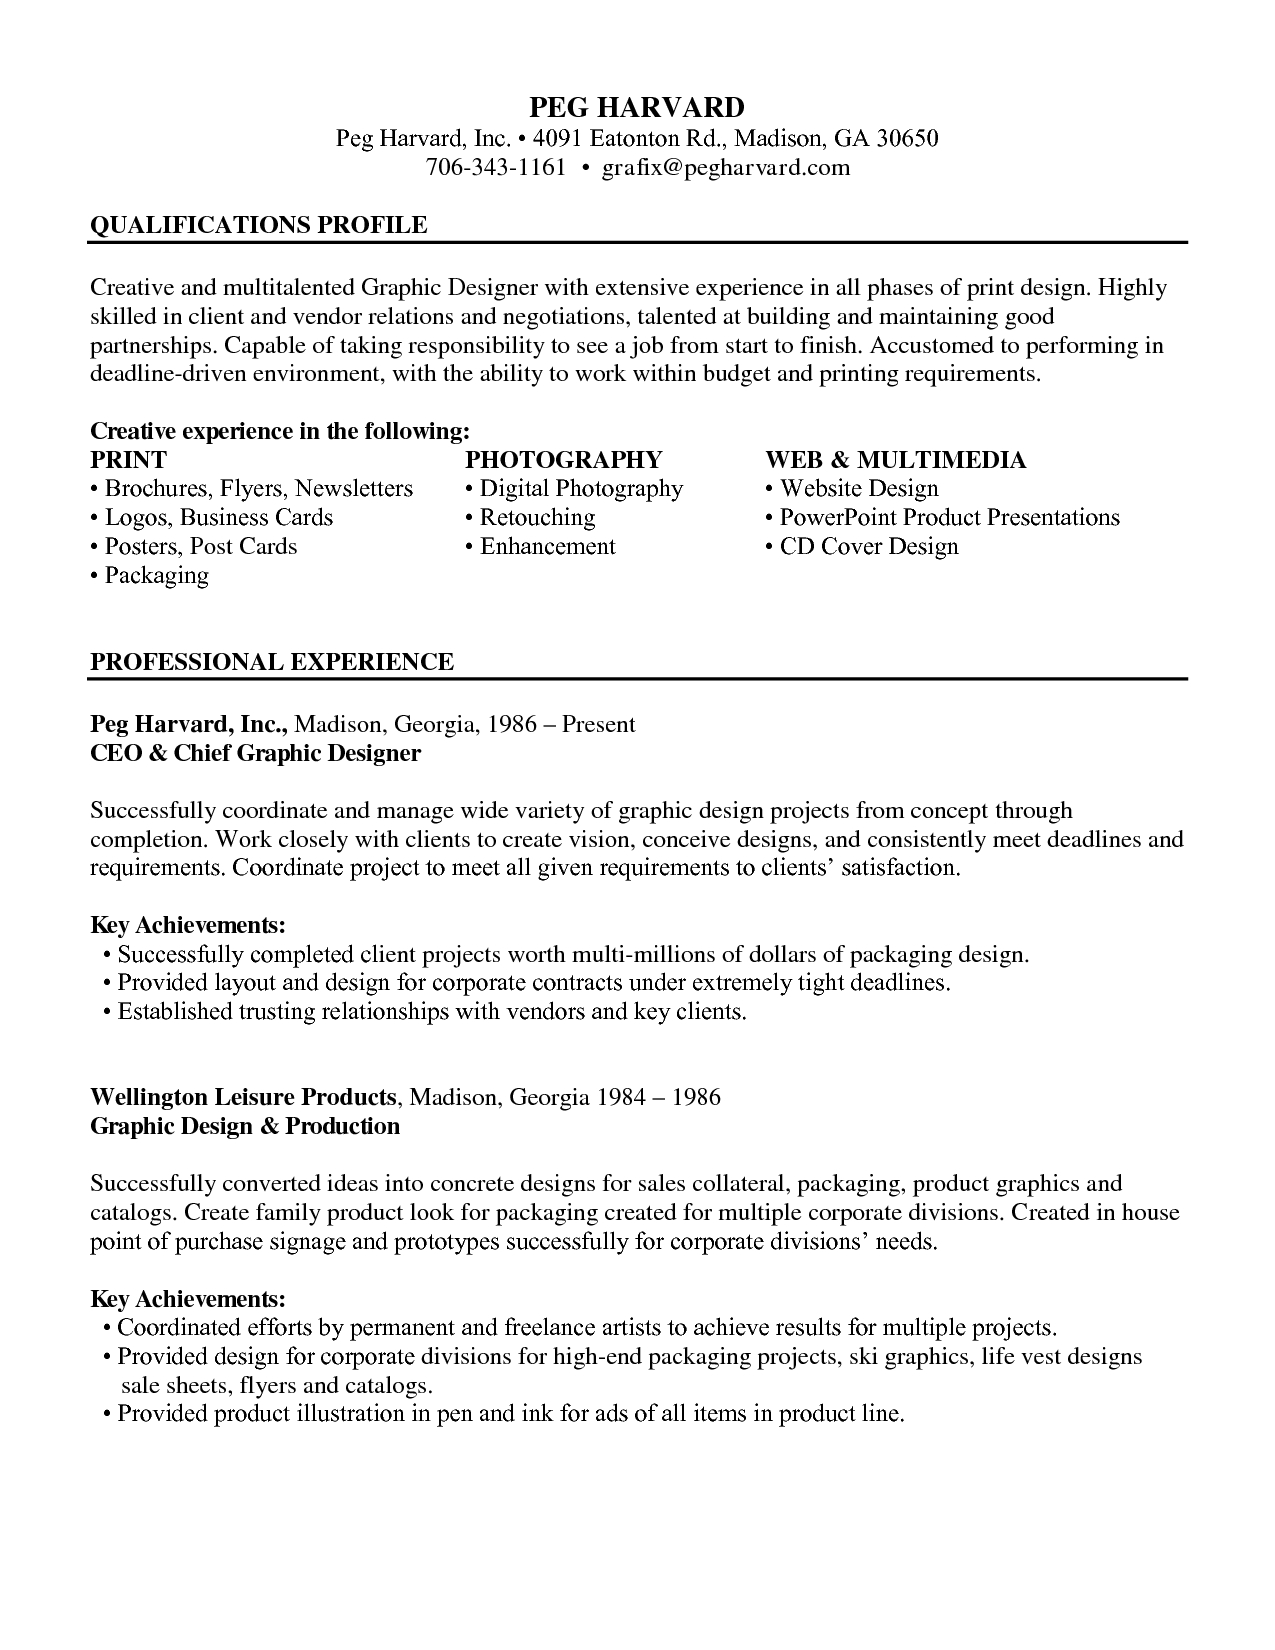 resume-templates-harvard-professional-templates-professional-templates